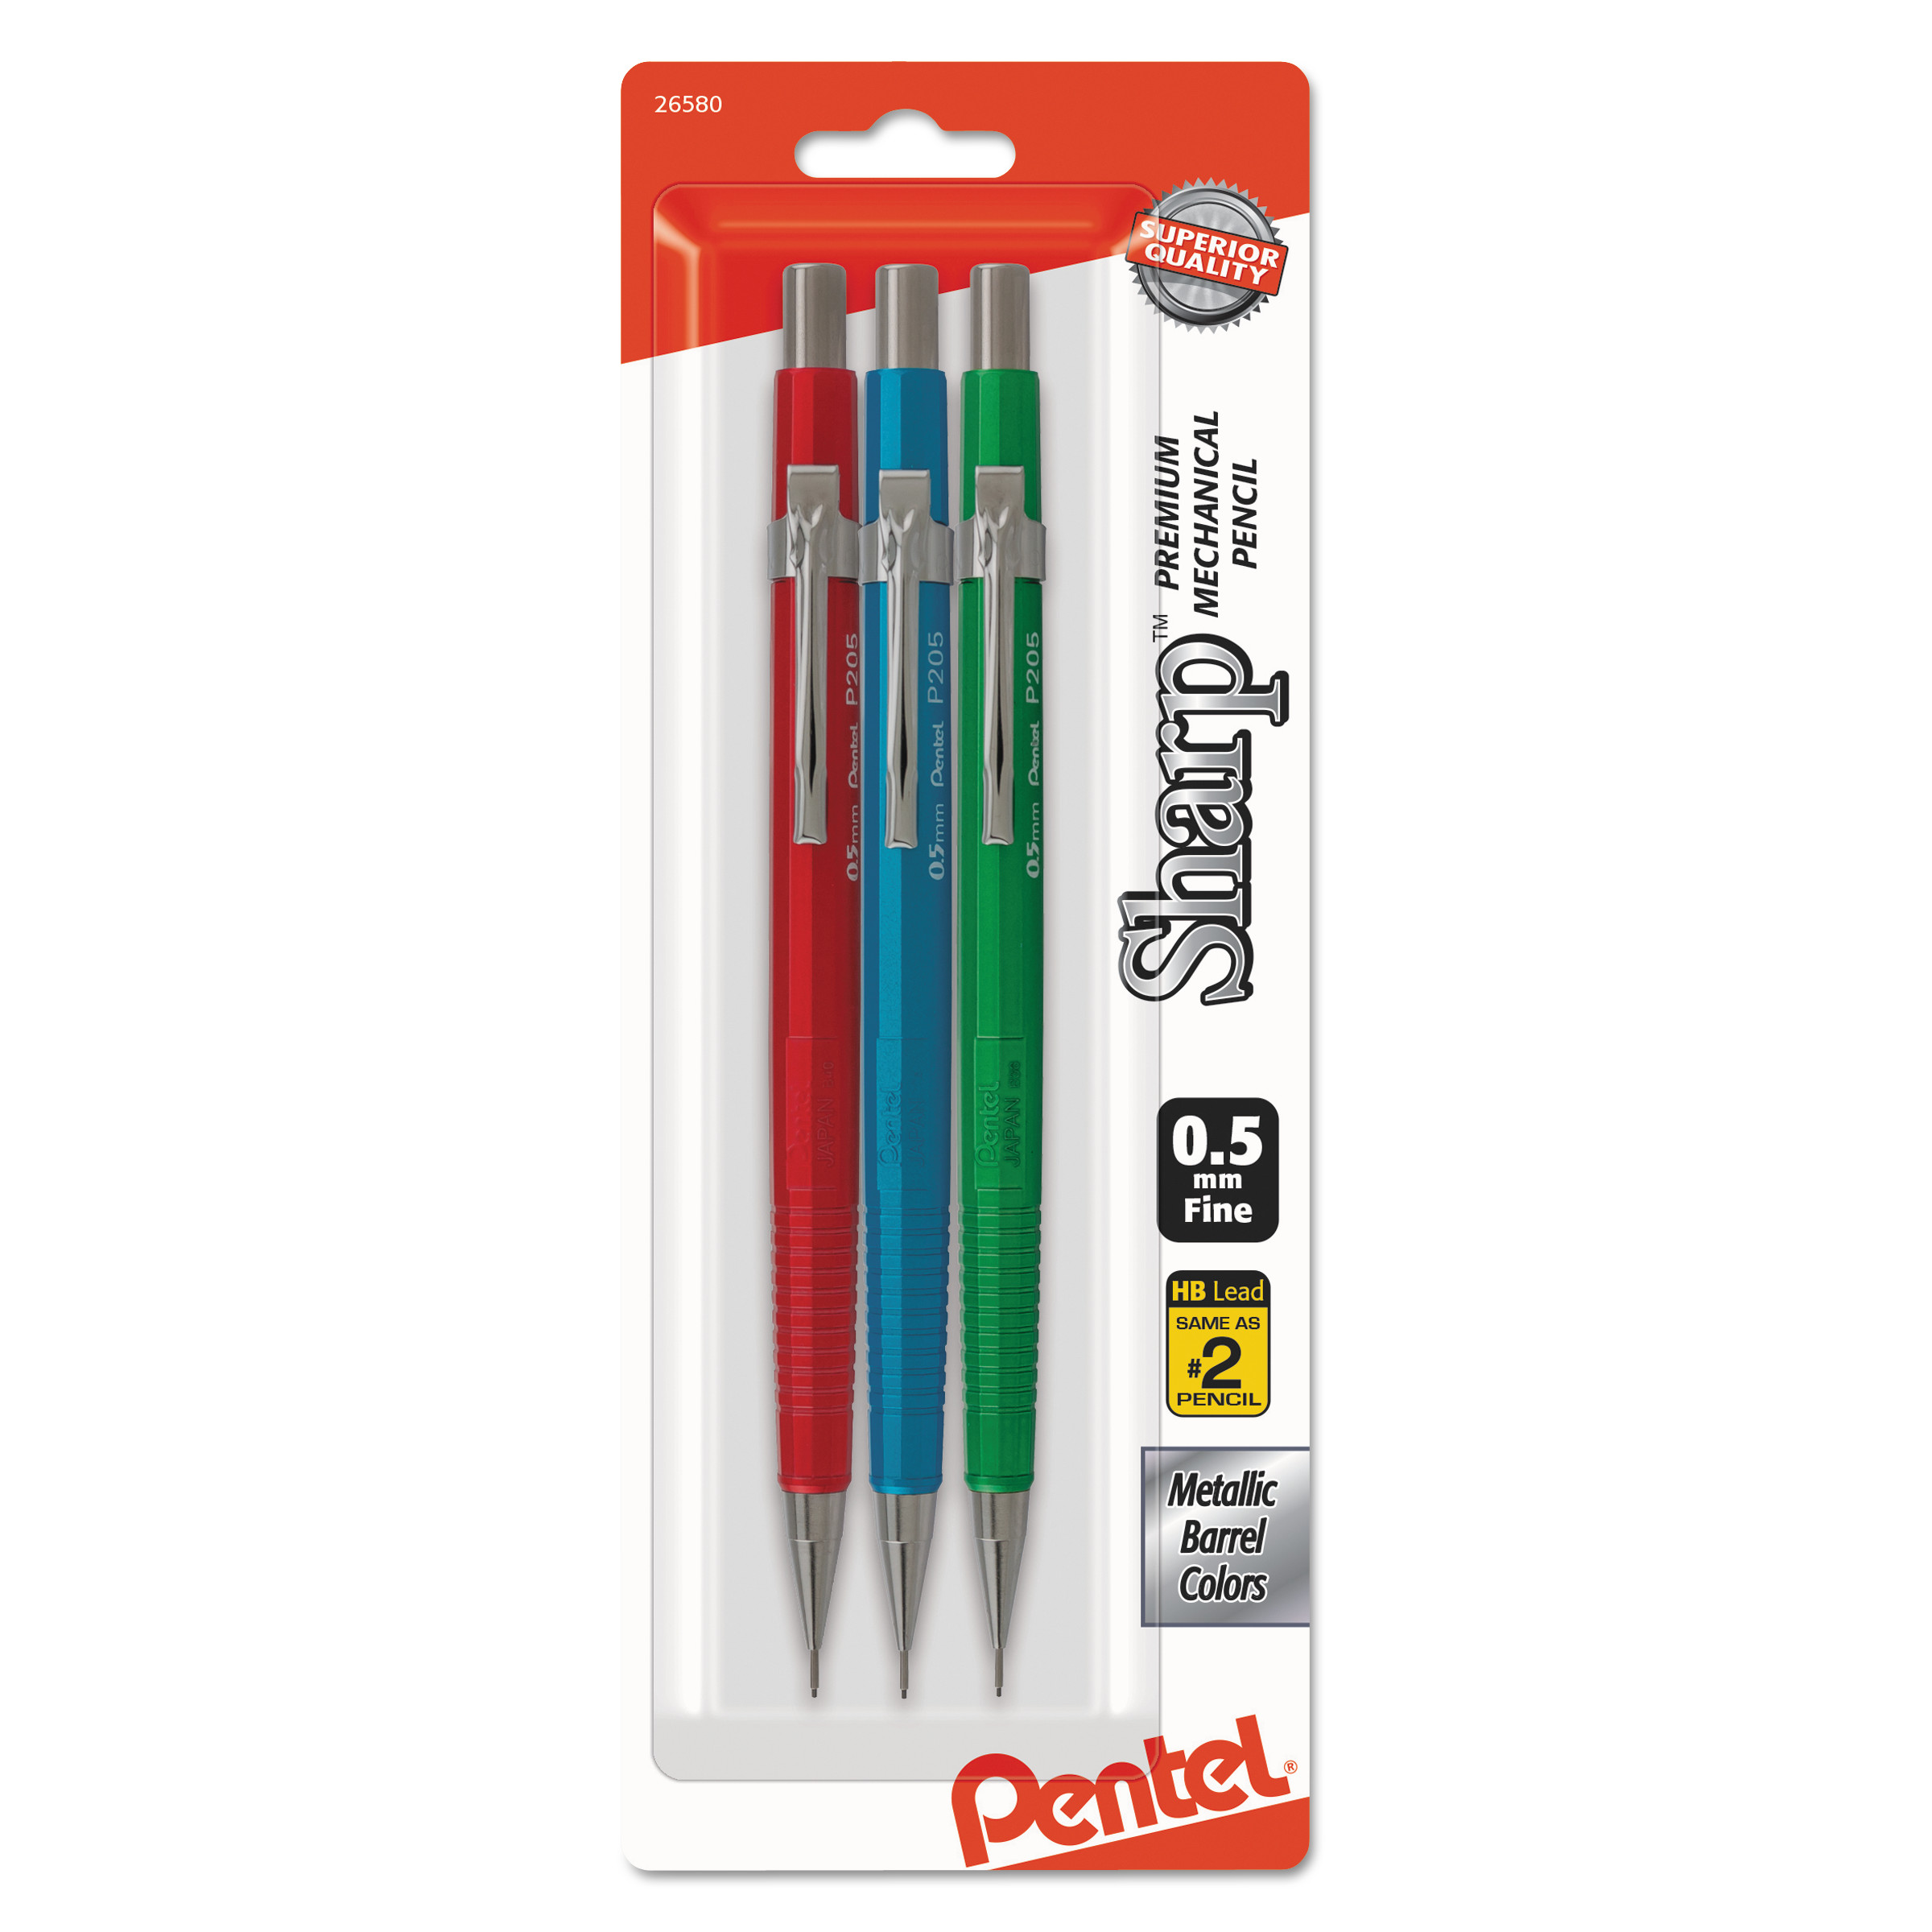 pentel pencils